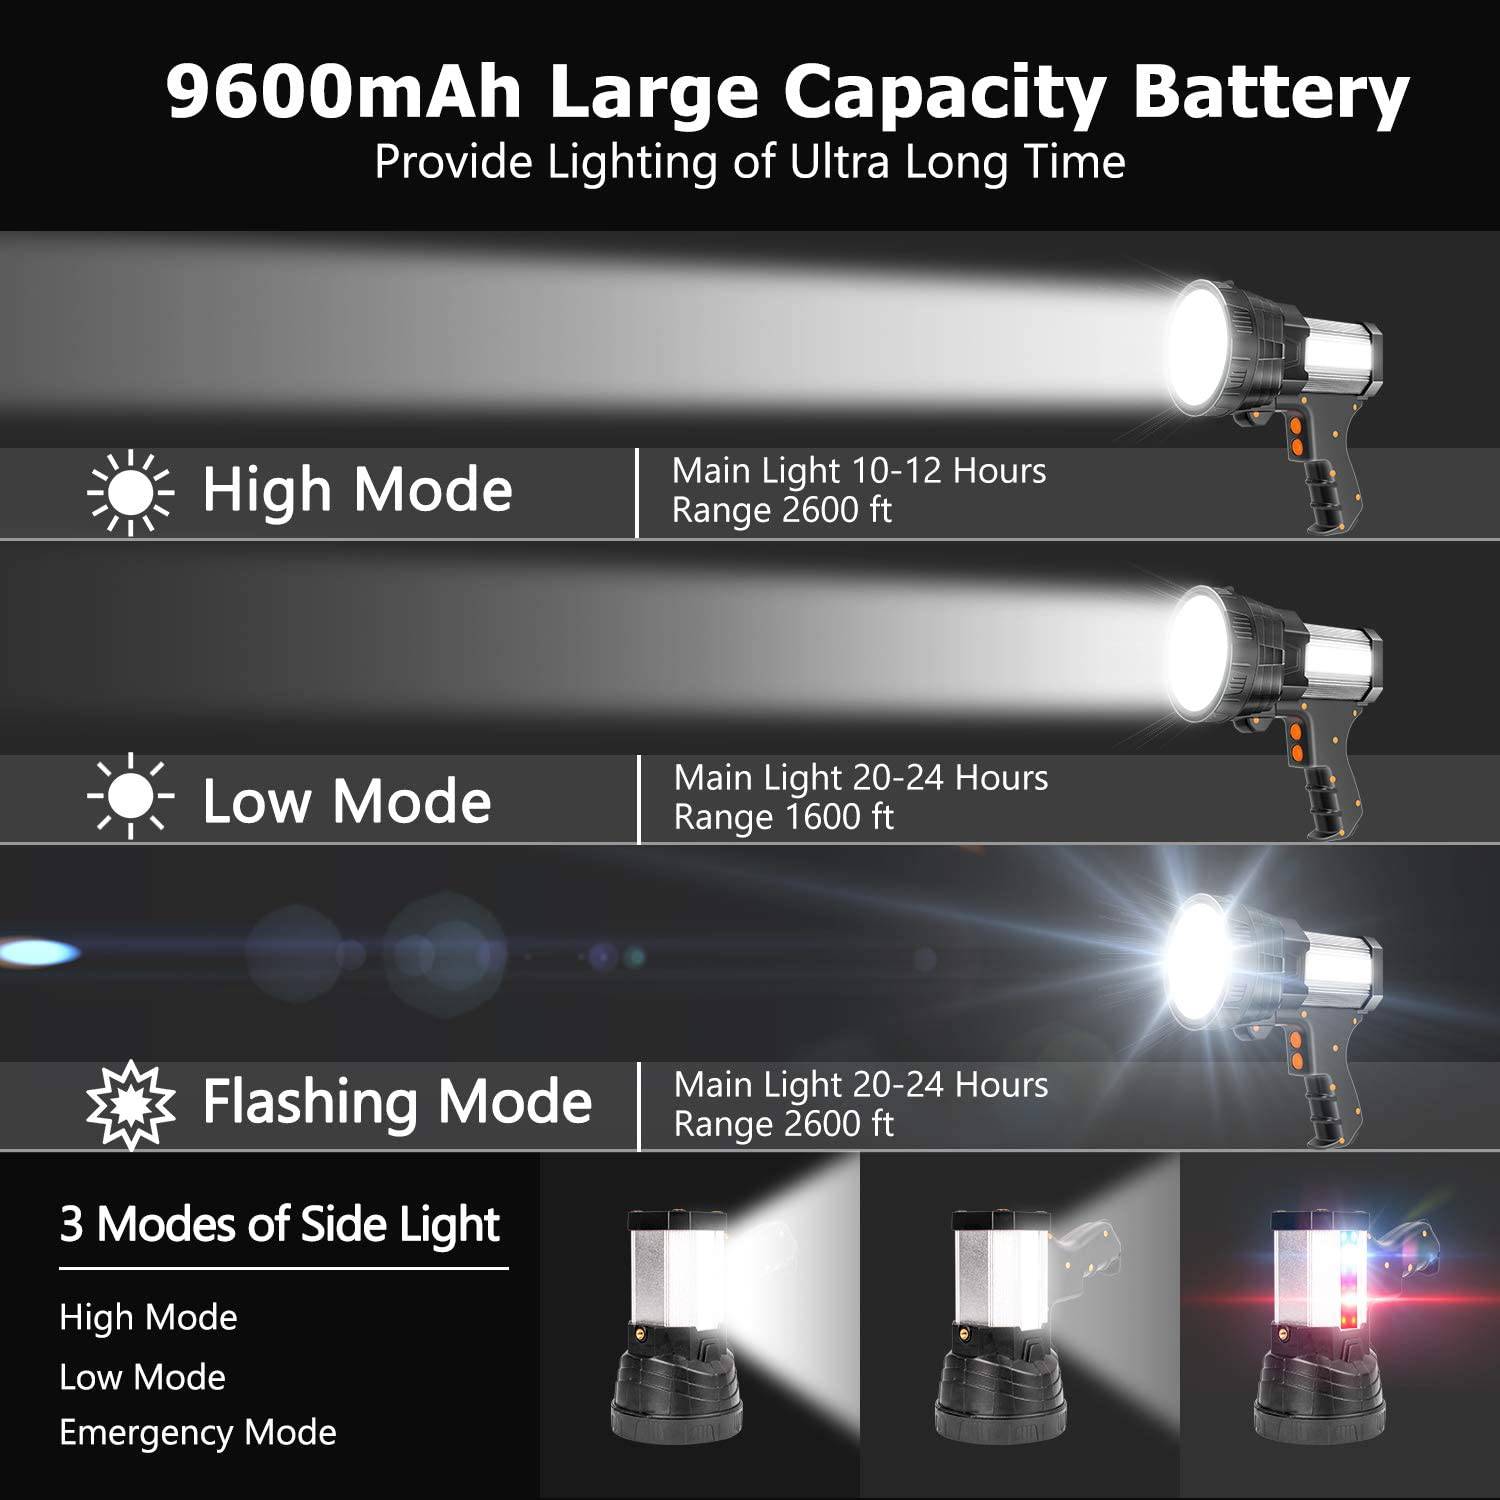 Super Bright flashlight Spotlight Handheld : 6000 Lumen LED rechargeable, 9600 mah - SKINMOZ MARKET